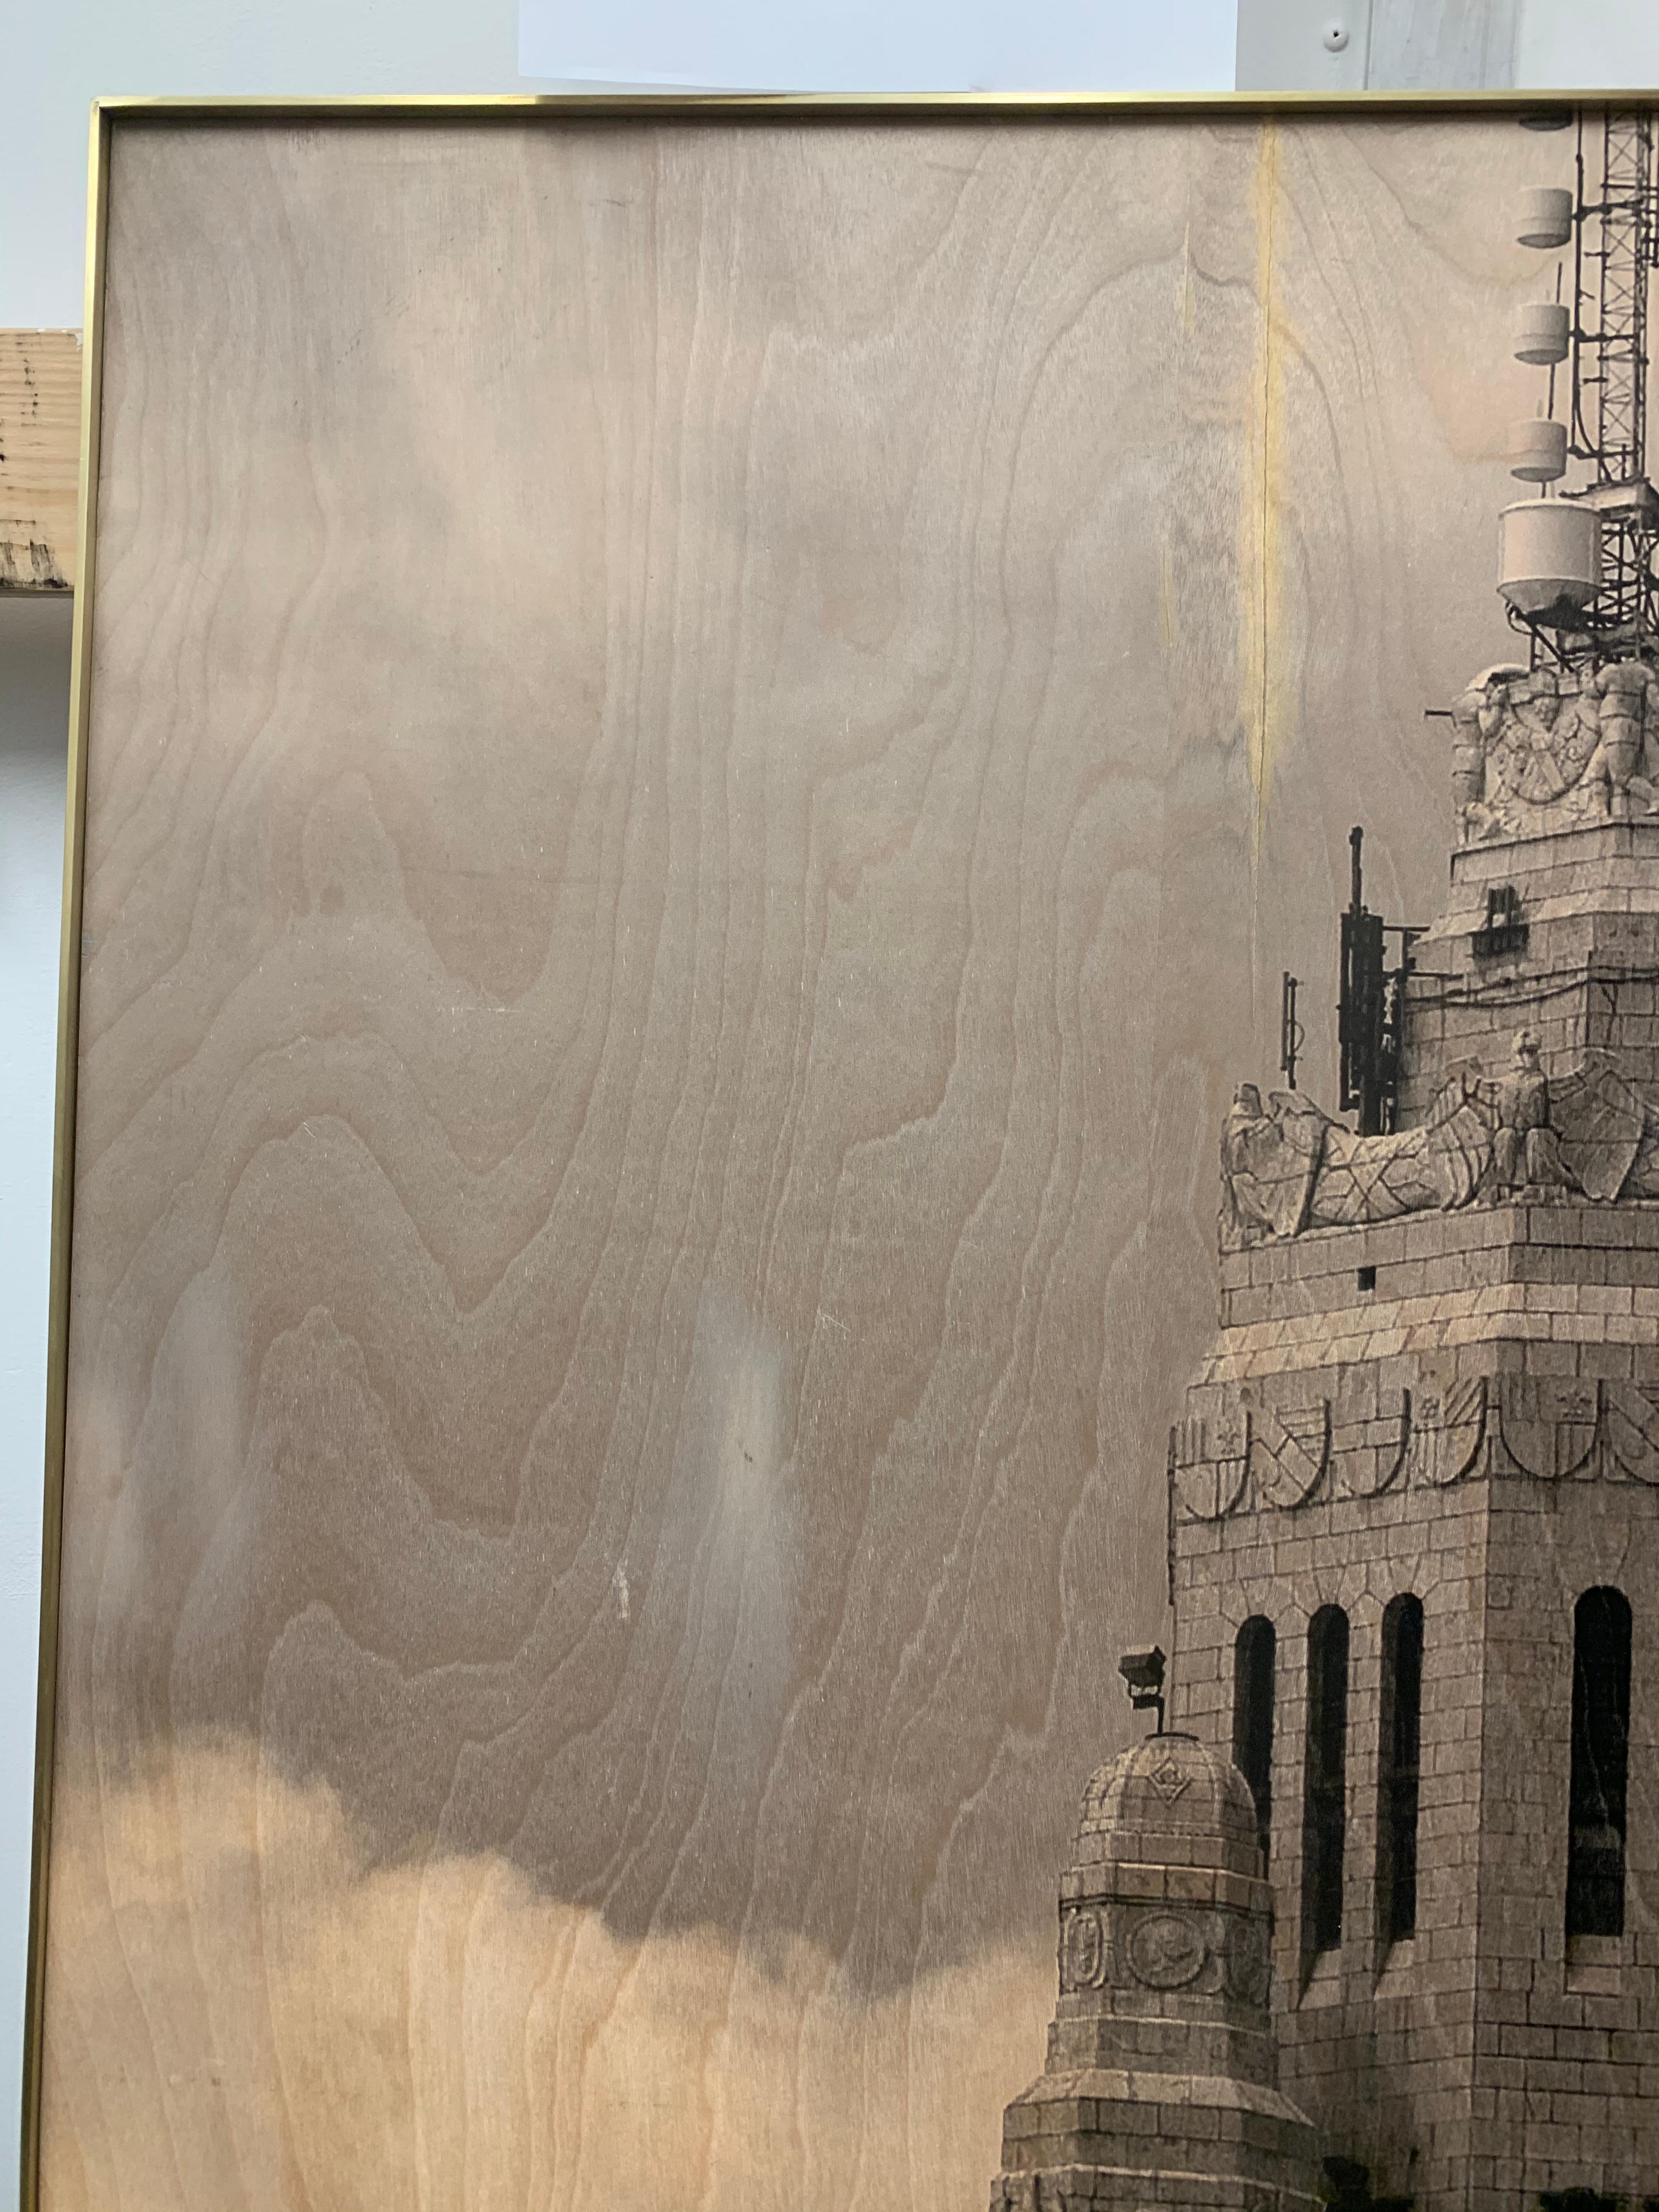 Fototransfer auf Holz mit Messingrahmen:: Leveque-Turm im Angebot 7